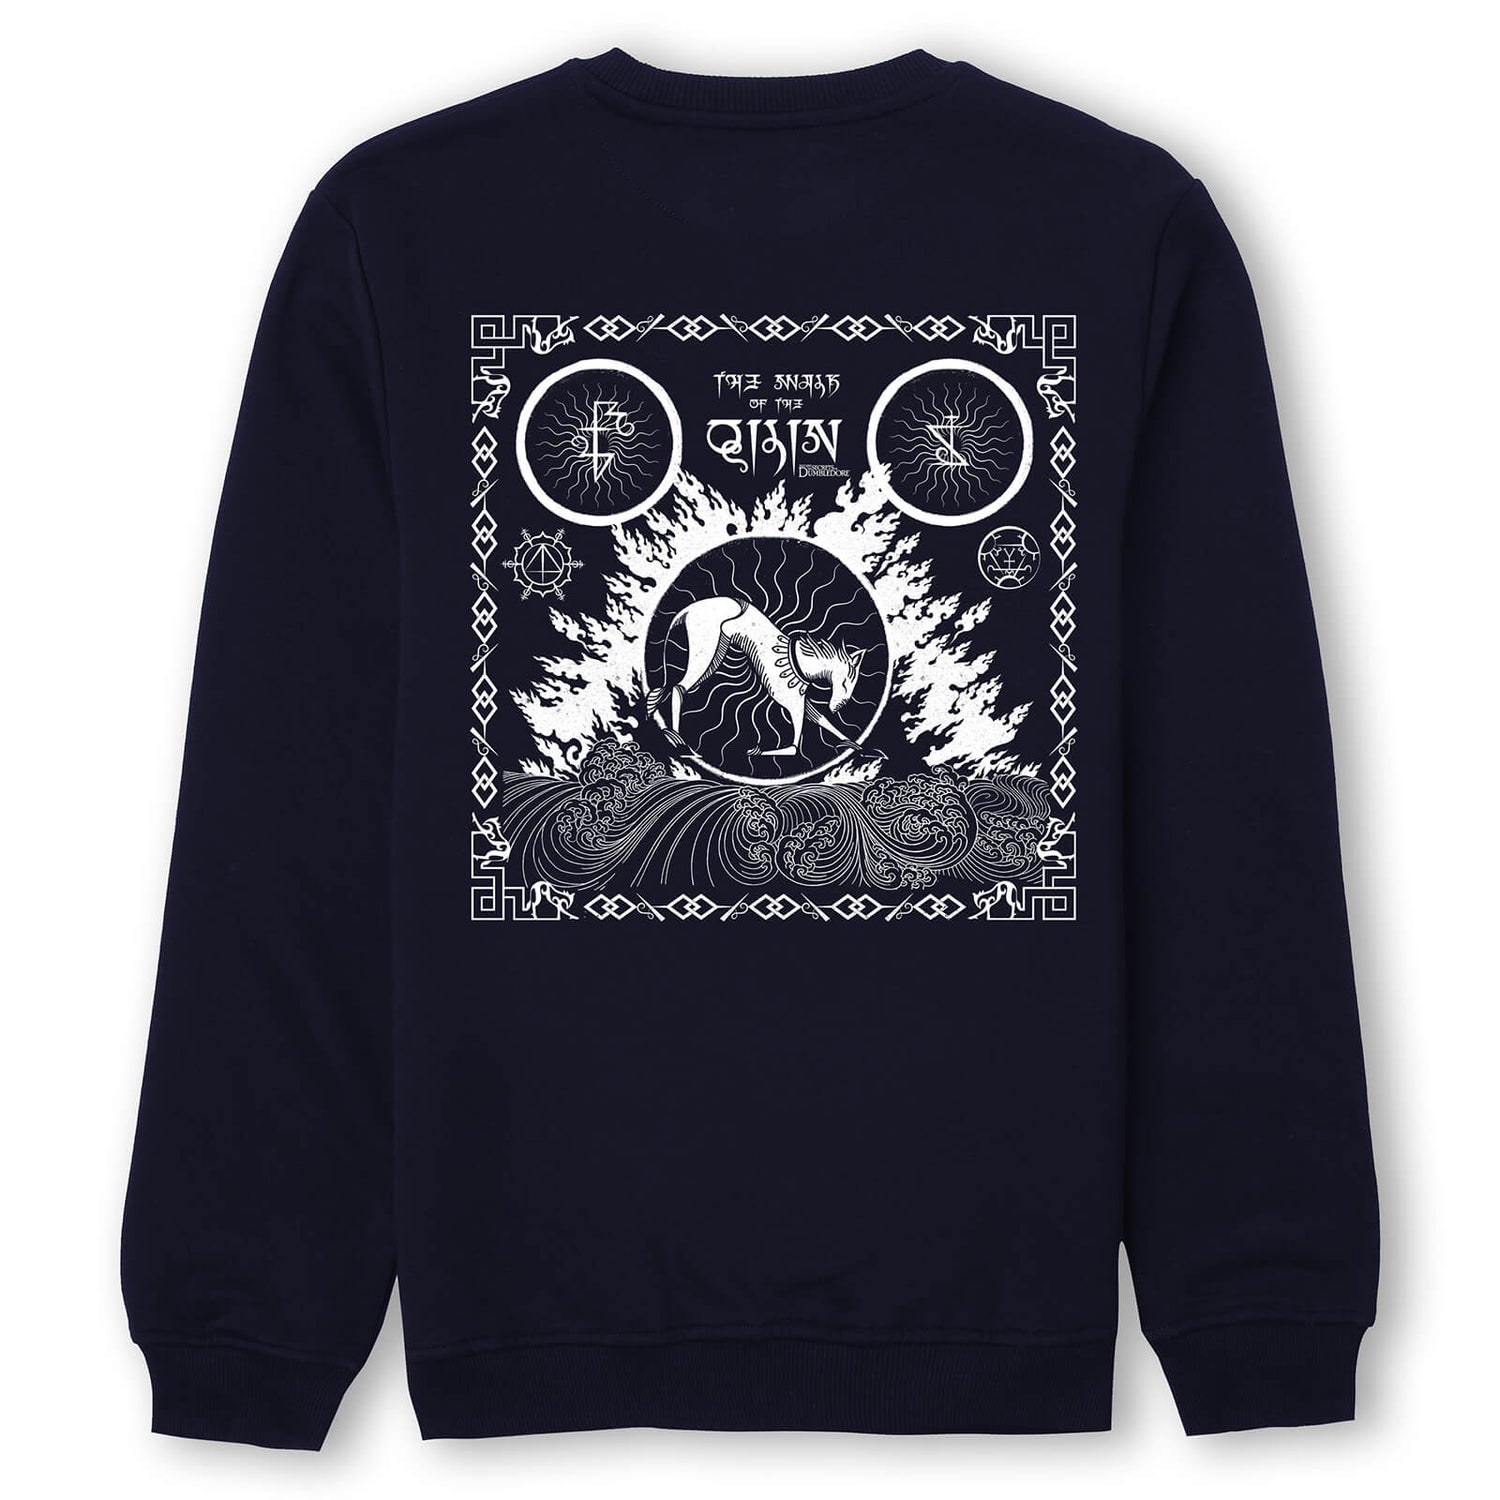 Fantastic Beasts Qilin Symbols Sweatshirt - Navy | retro vibes and ...